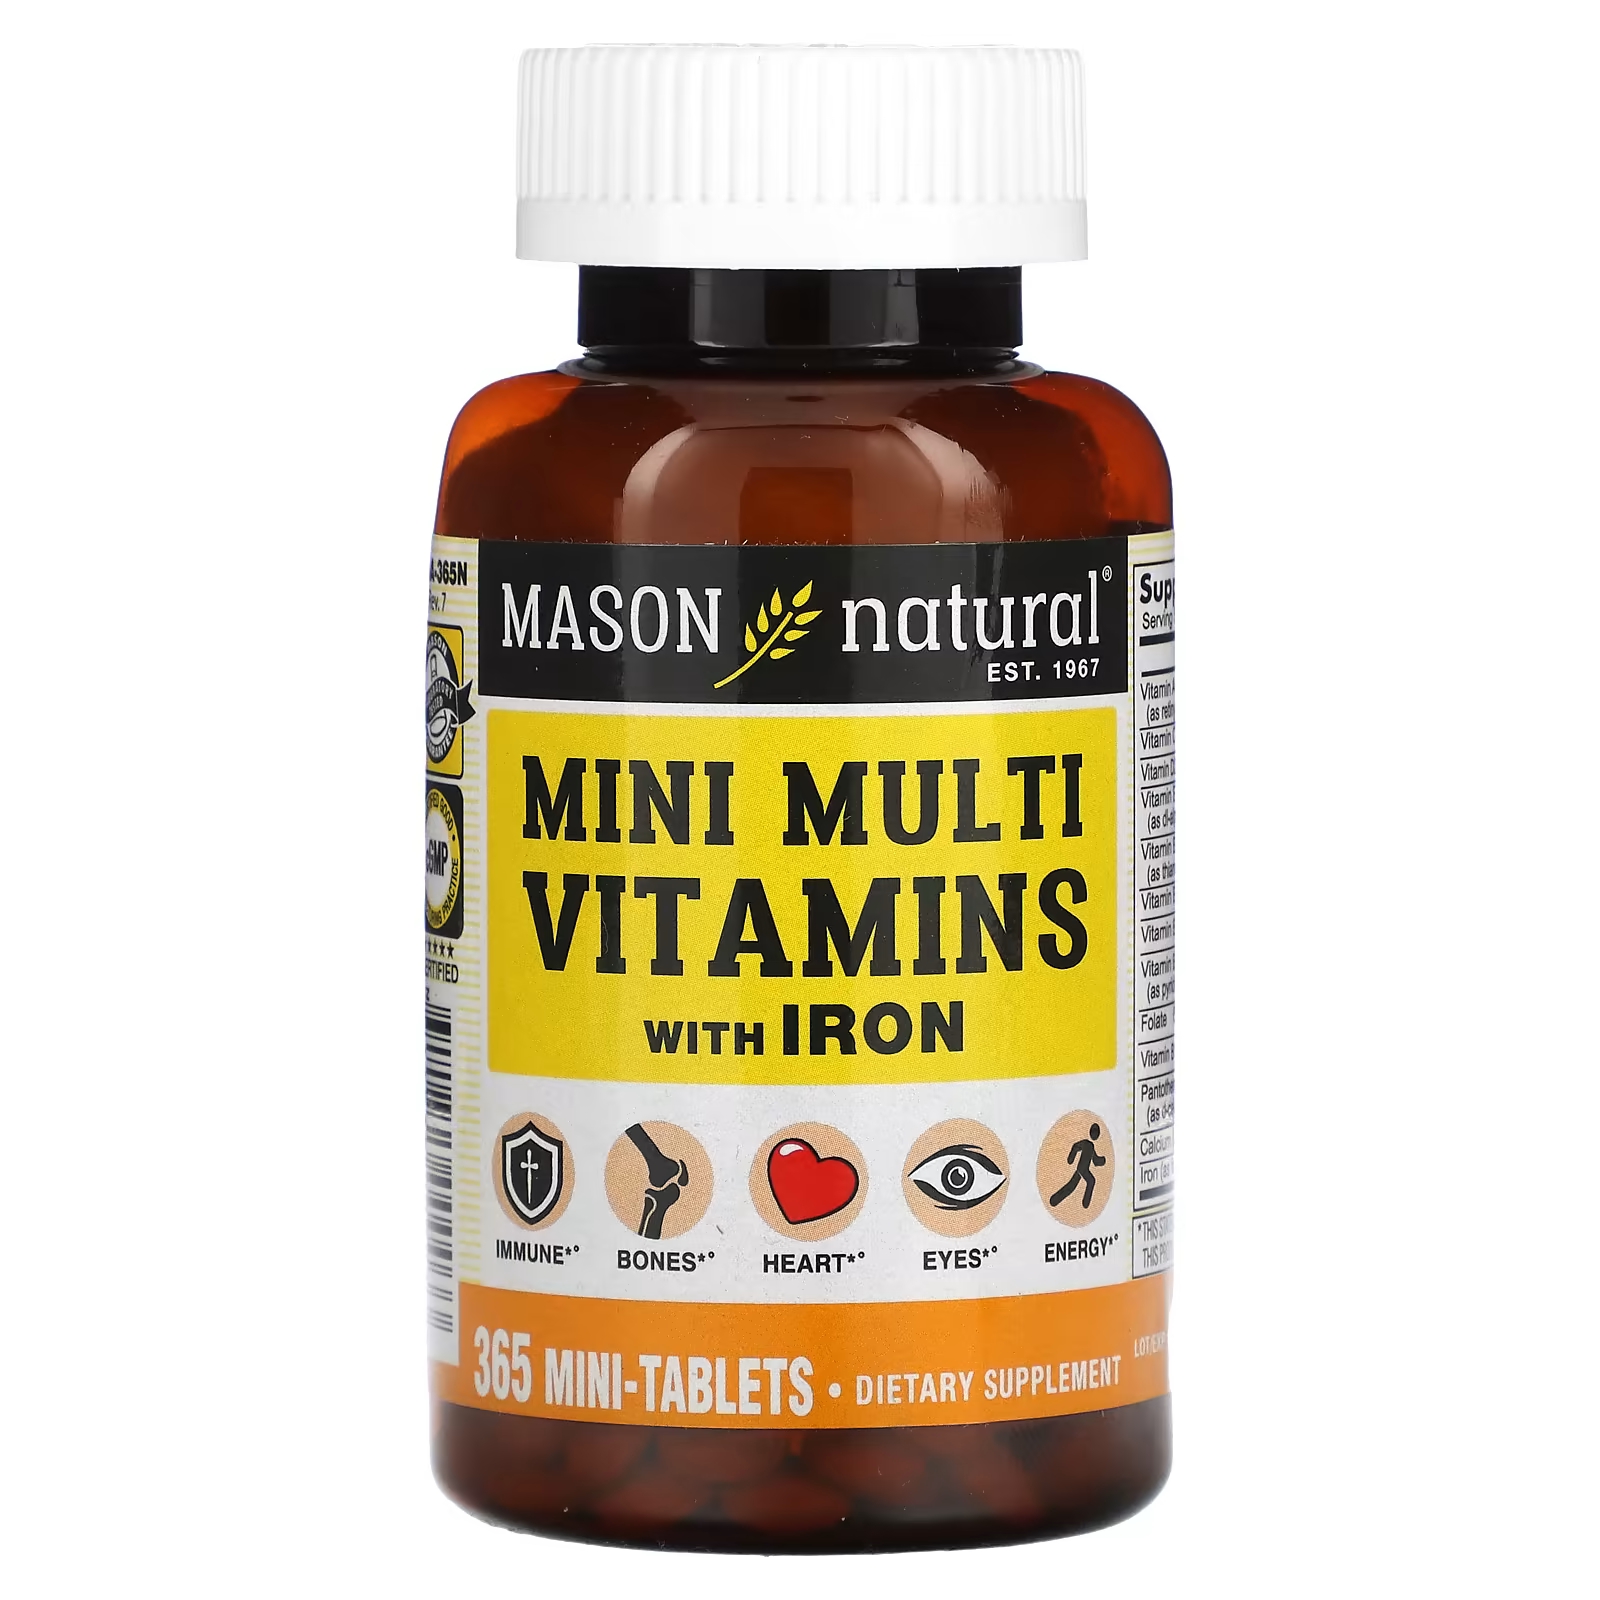 Мультивитамины Mason Natural с железом, 365 мини-таблеток